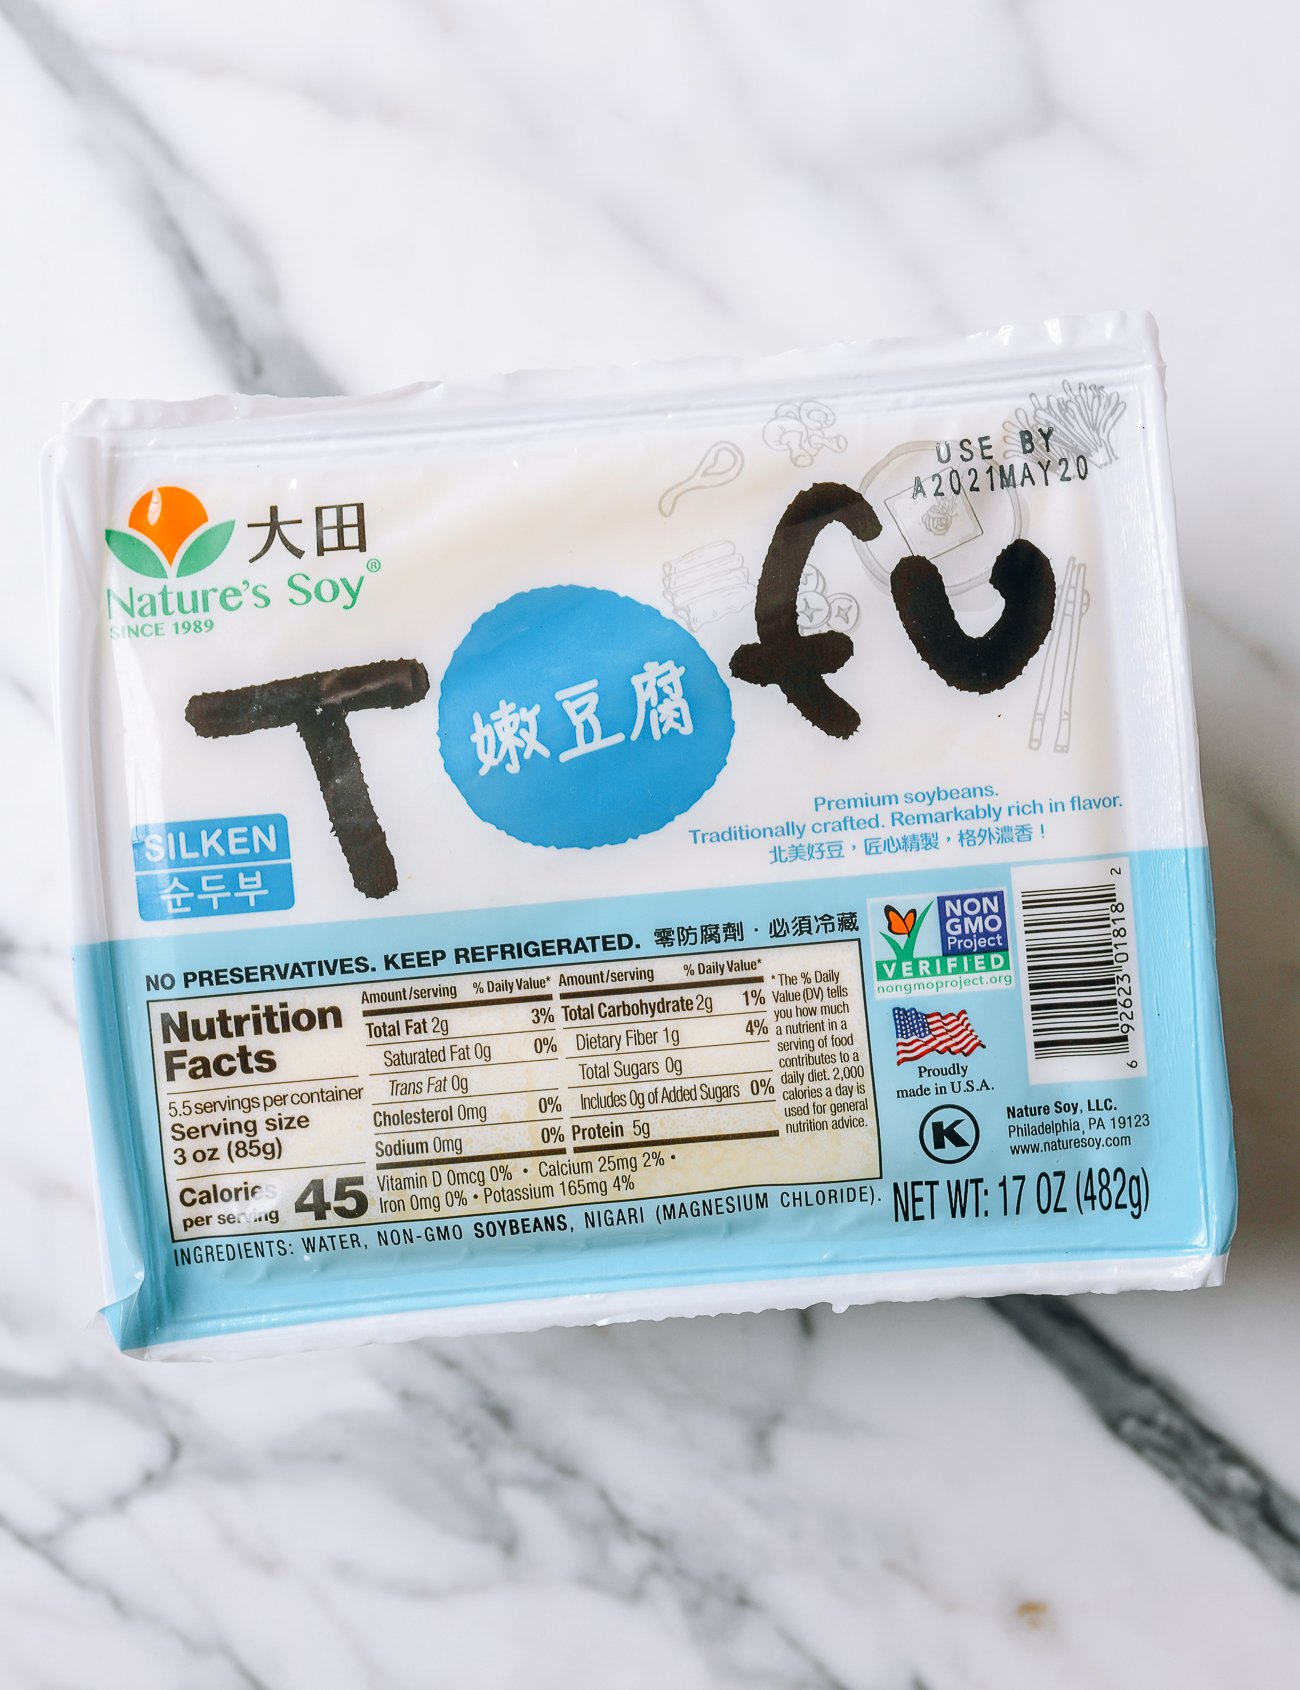 Box of Silken Tofu